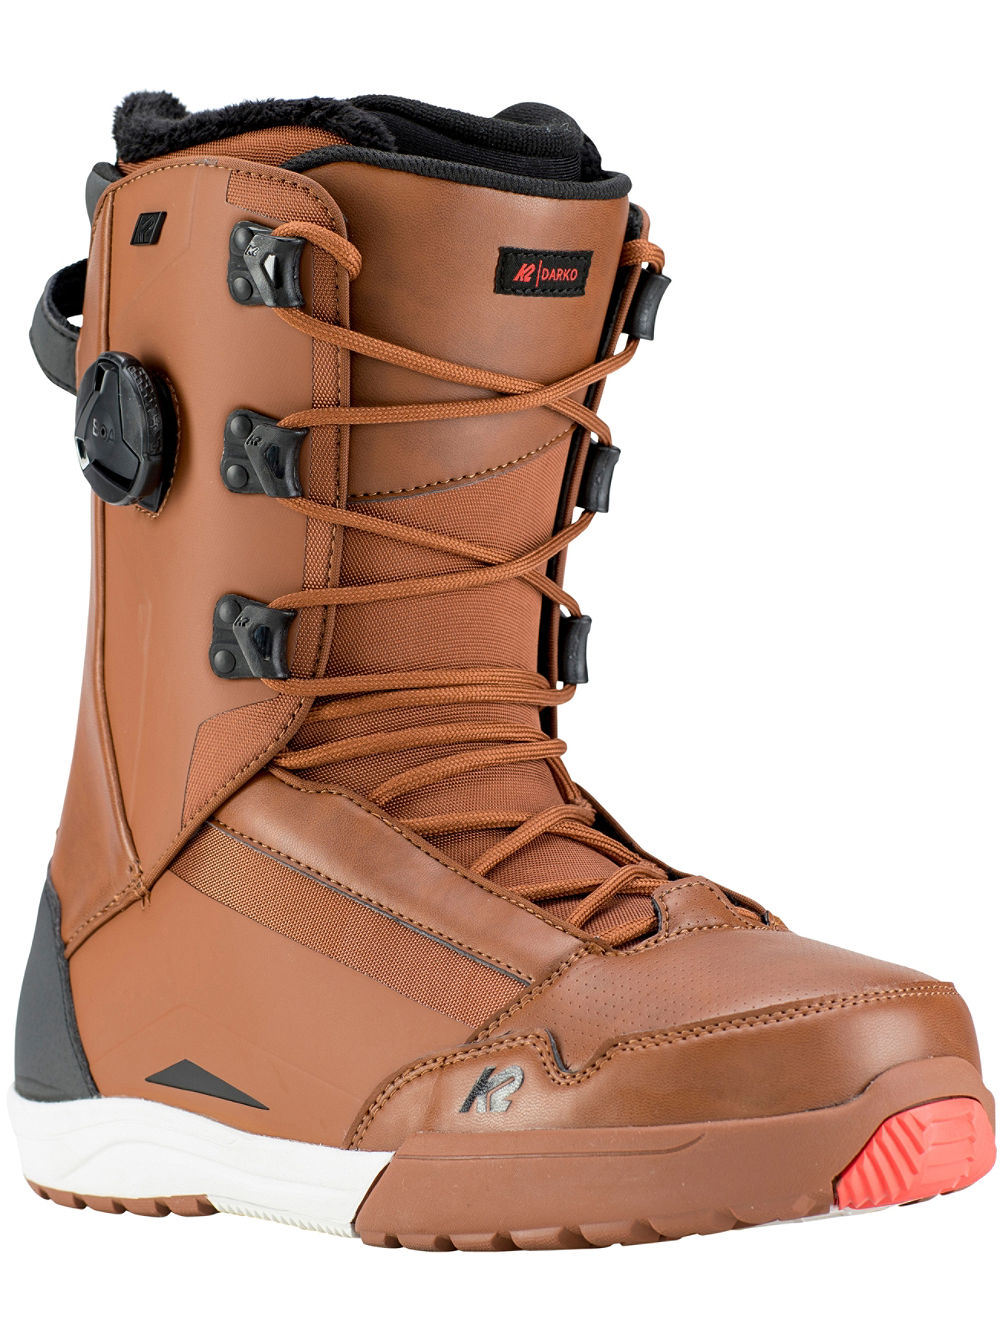 Darko Boots de Snowboard